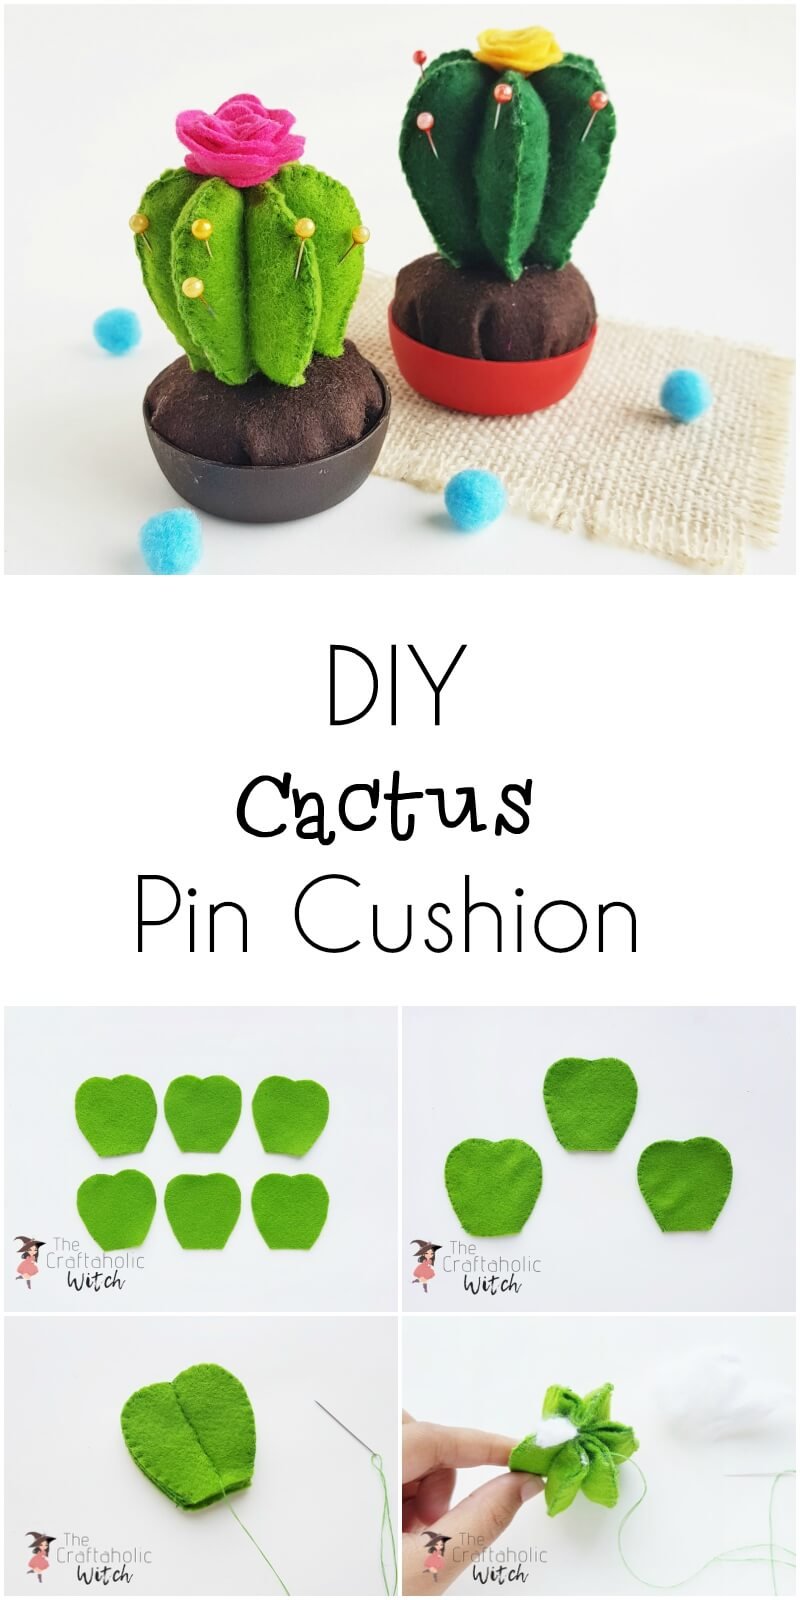 How to Make a DIY Cactus Pin Cushion